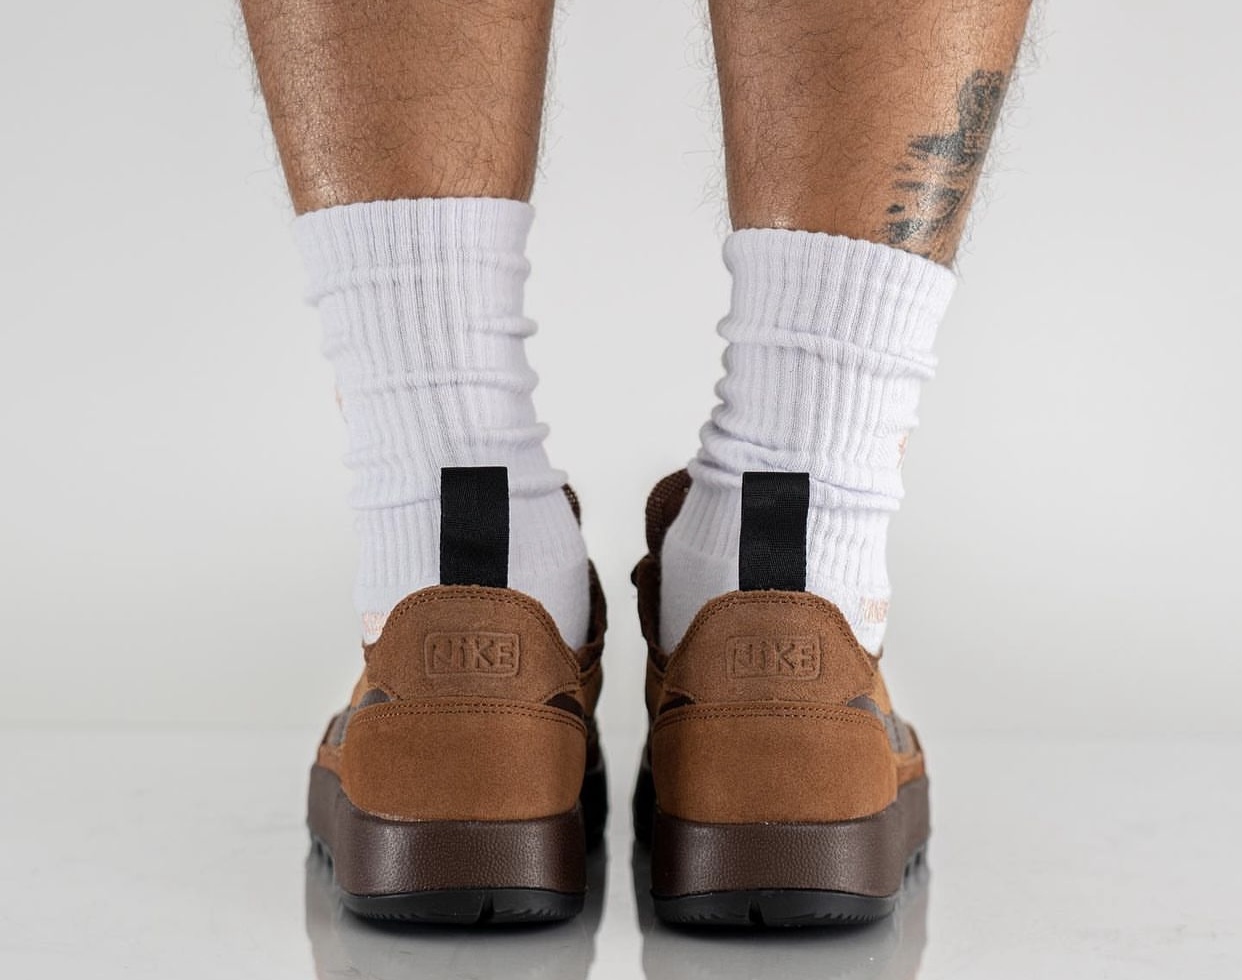 Tom Sachs x NikeCraft General Purpose Shoe Brown DA6672 201 Release Date On Feet 7